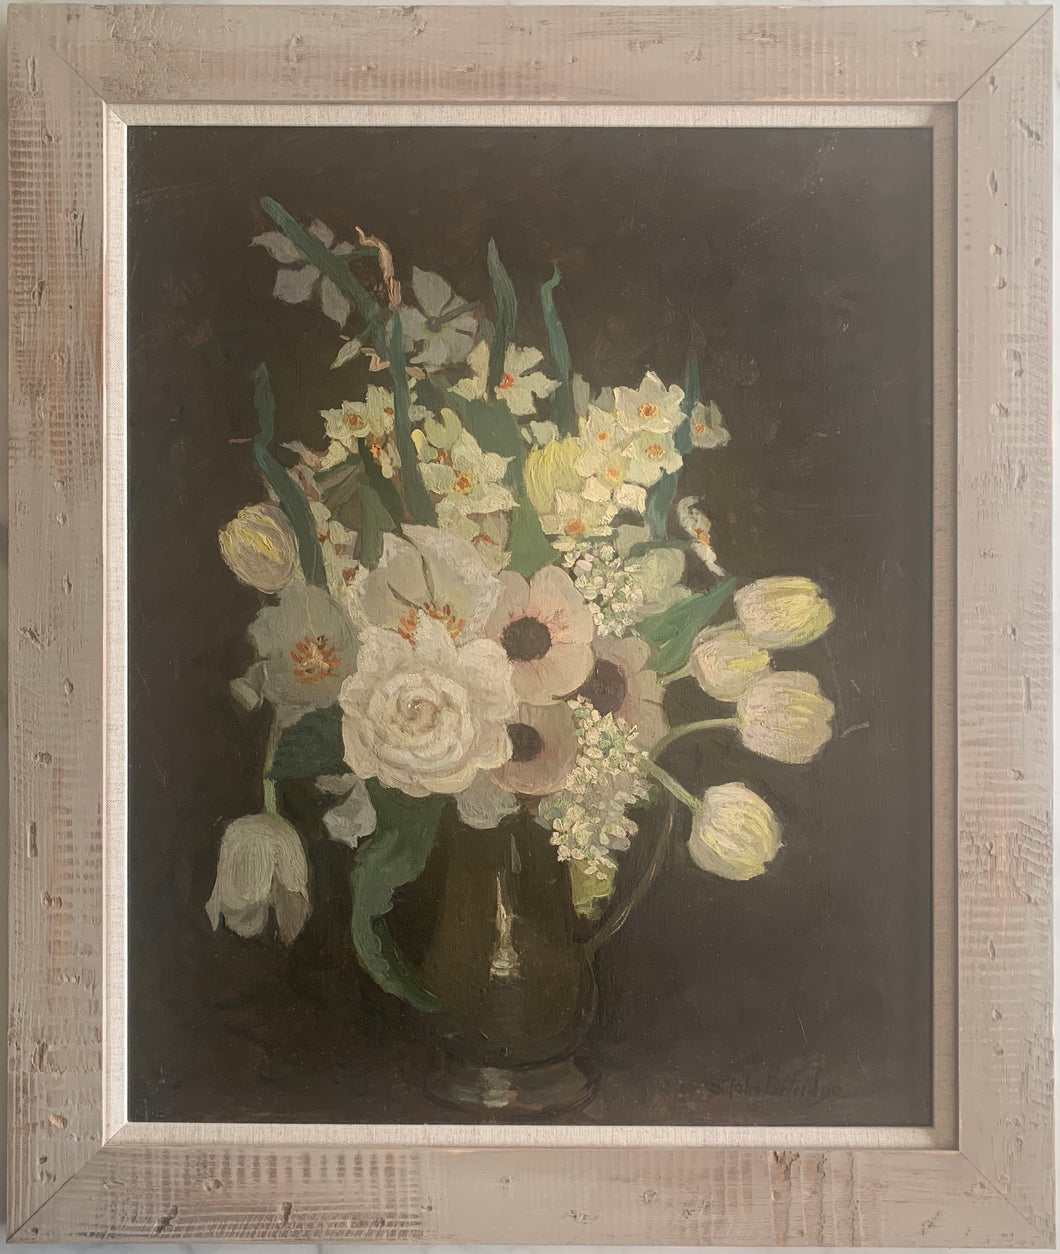 Oil painting on board: Spring flowers in a brown jug (artist Ann St John Partridge)